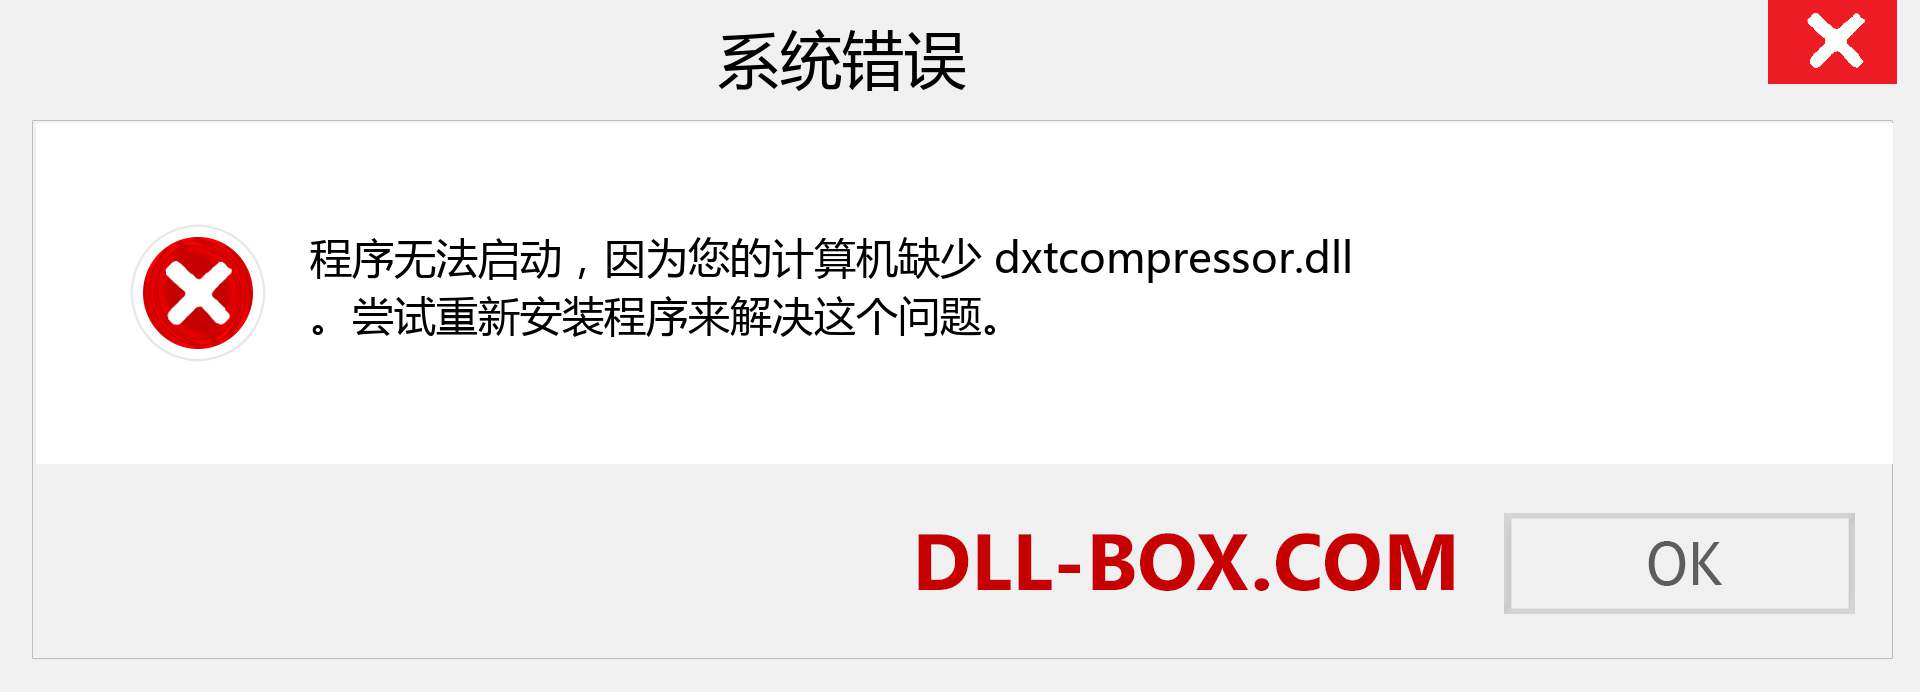 dxtcompressor.dll 文件丢失？。 适用于 Windows 7、8、10 的下载 - 修复 Windows、照片、图像上的 dxtcompressor dll 丢失错误